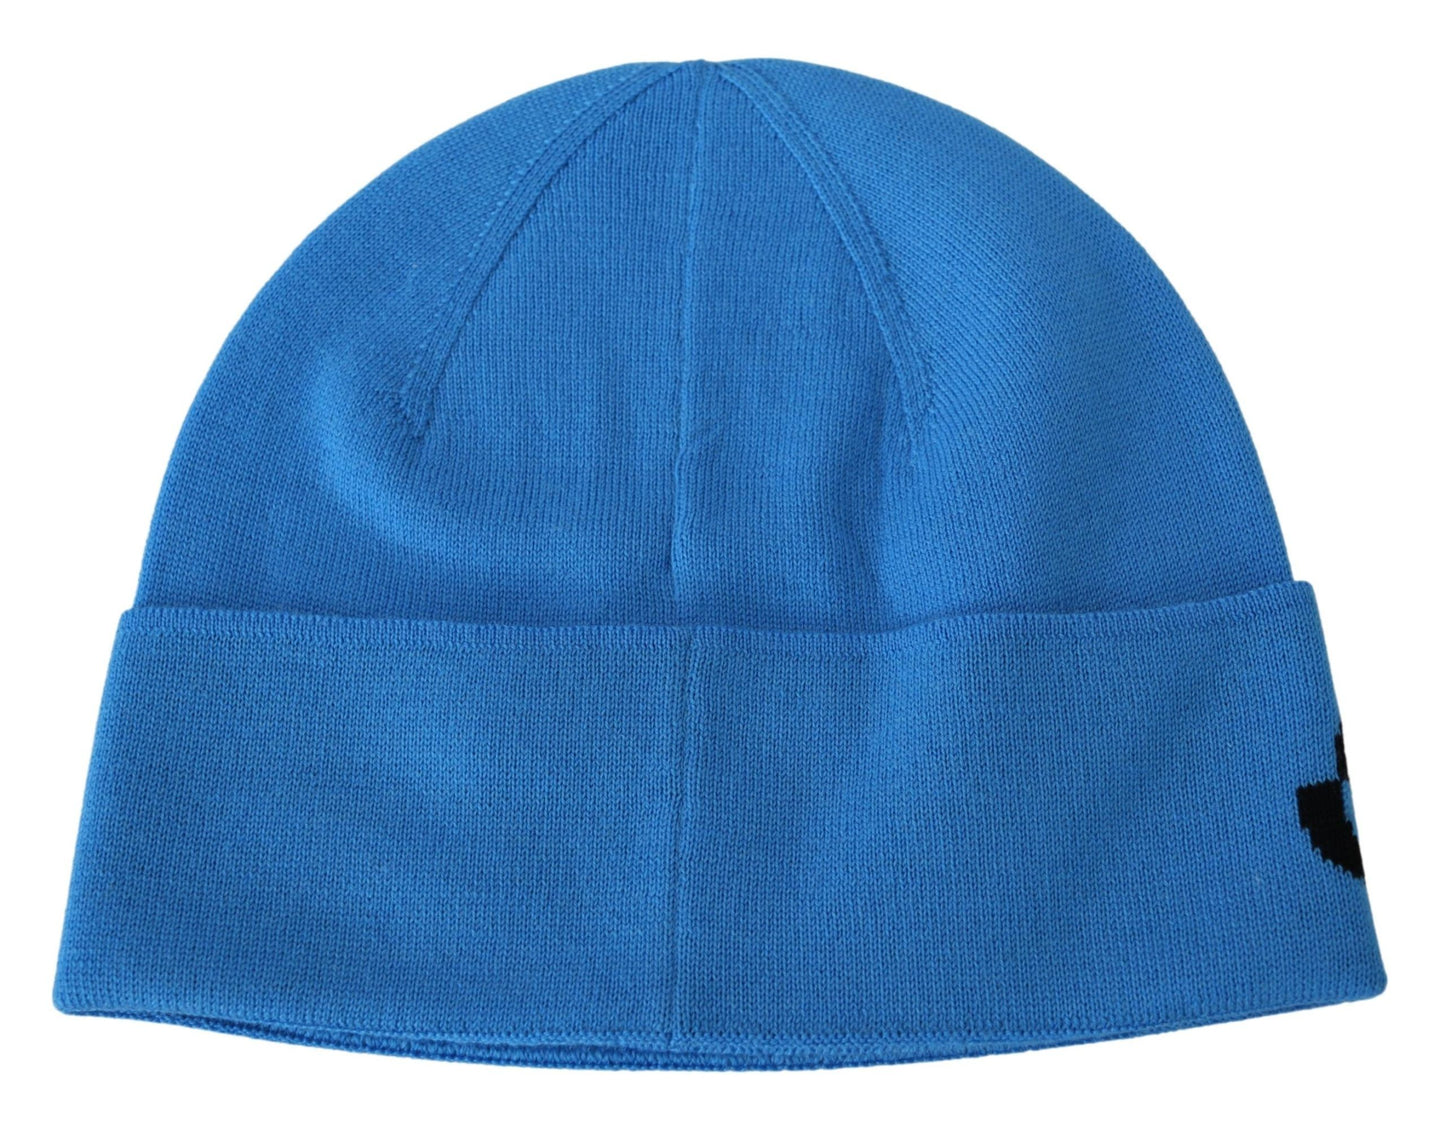 Givenchy Blue Wool Unisex Winter Warm Beanie Hat